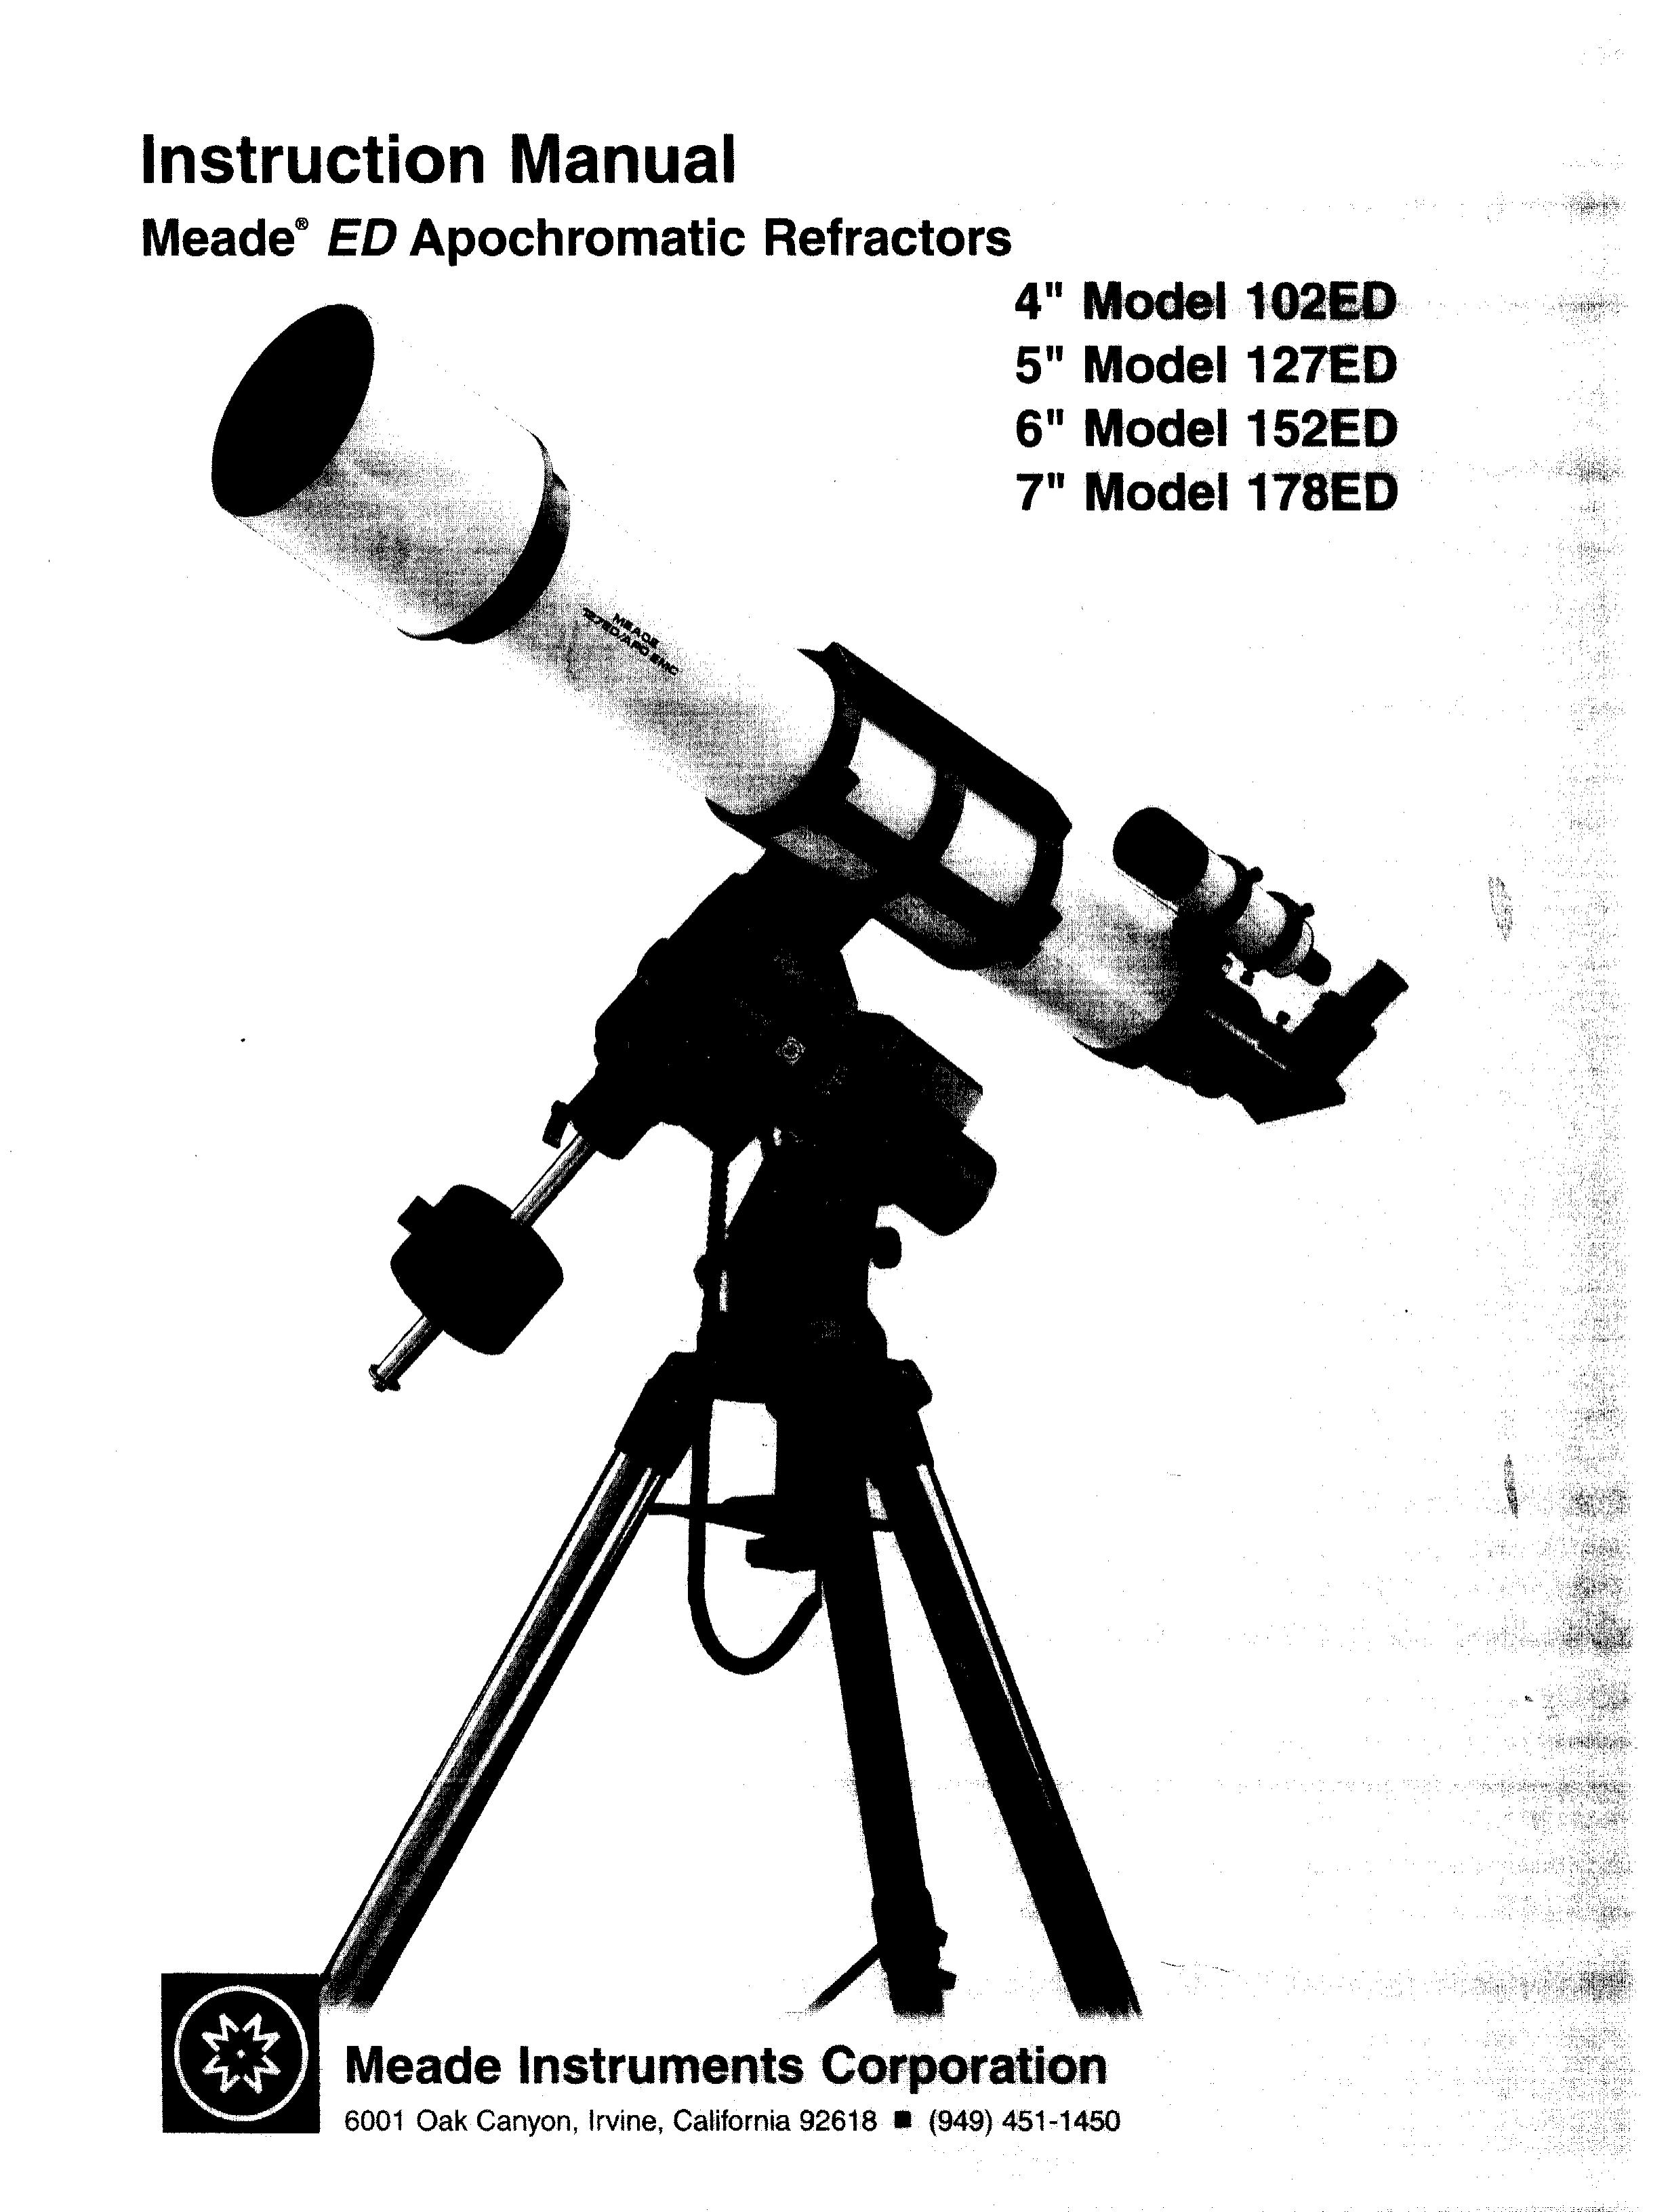 Meade 152ED Telescope User Manual